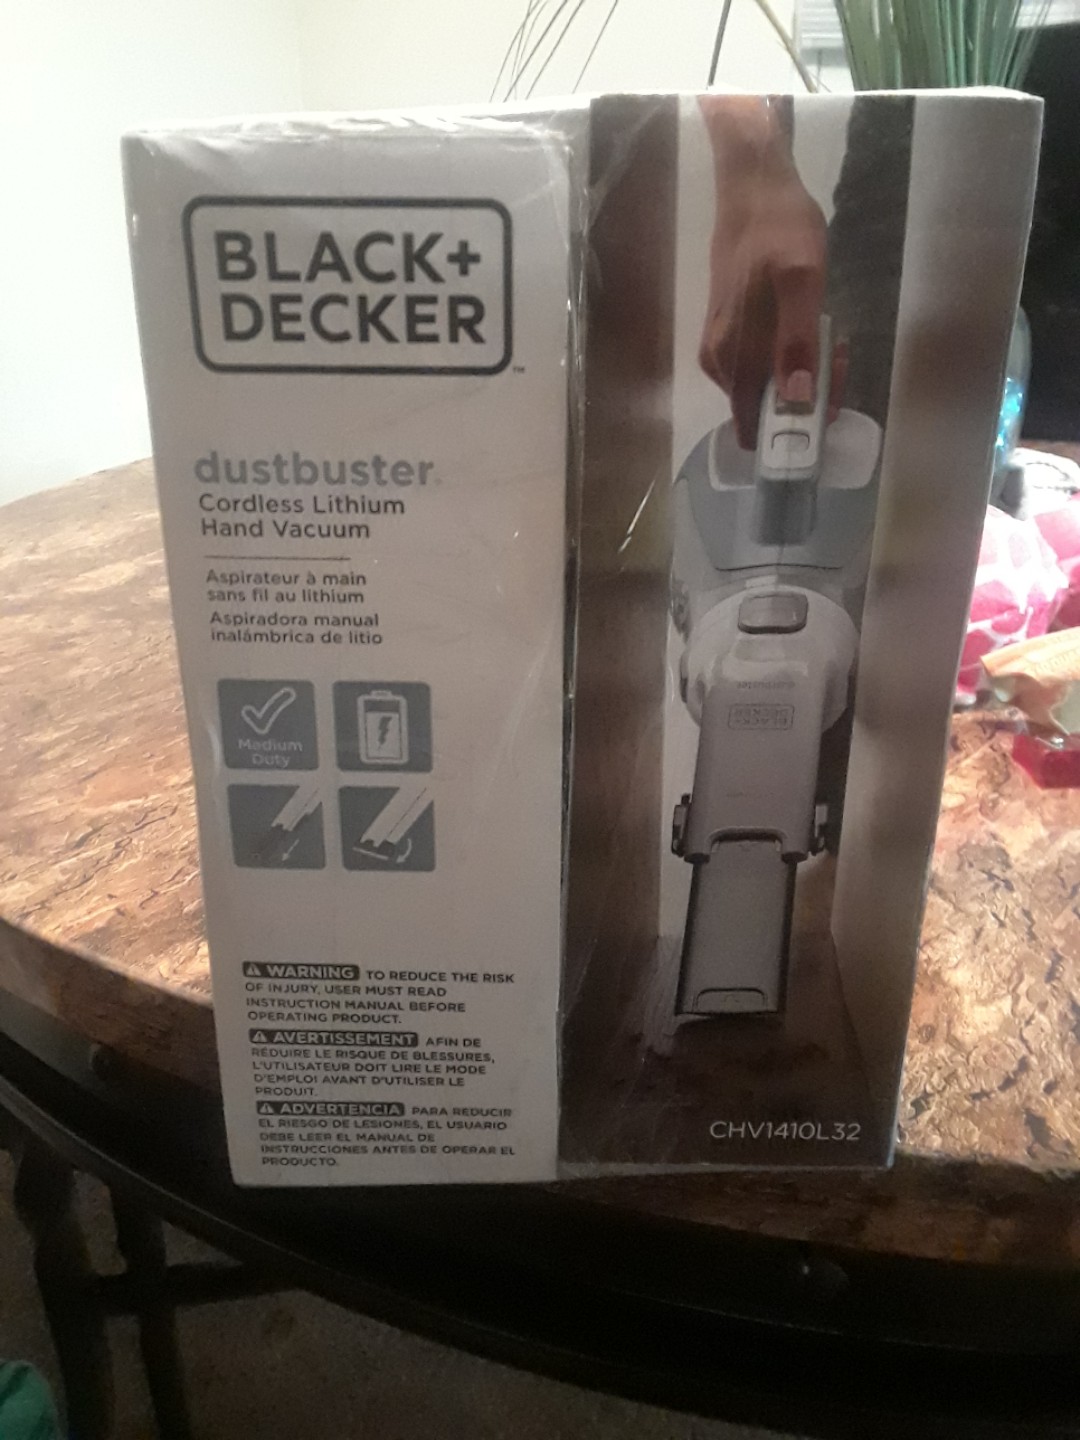 Black+decker CHV1410L32 Dustbuster 16V Lithium Hand Vacuum